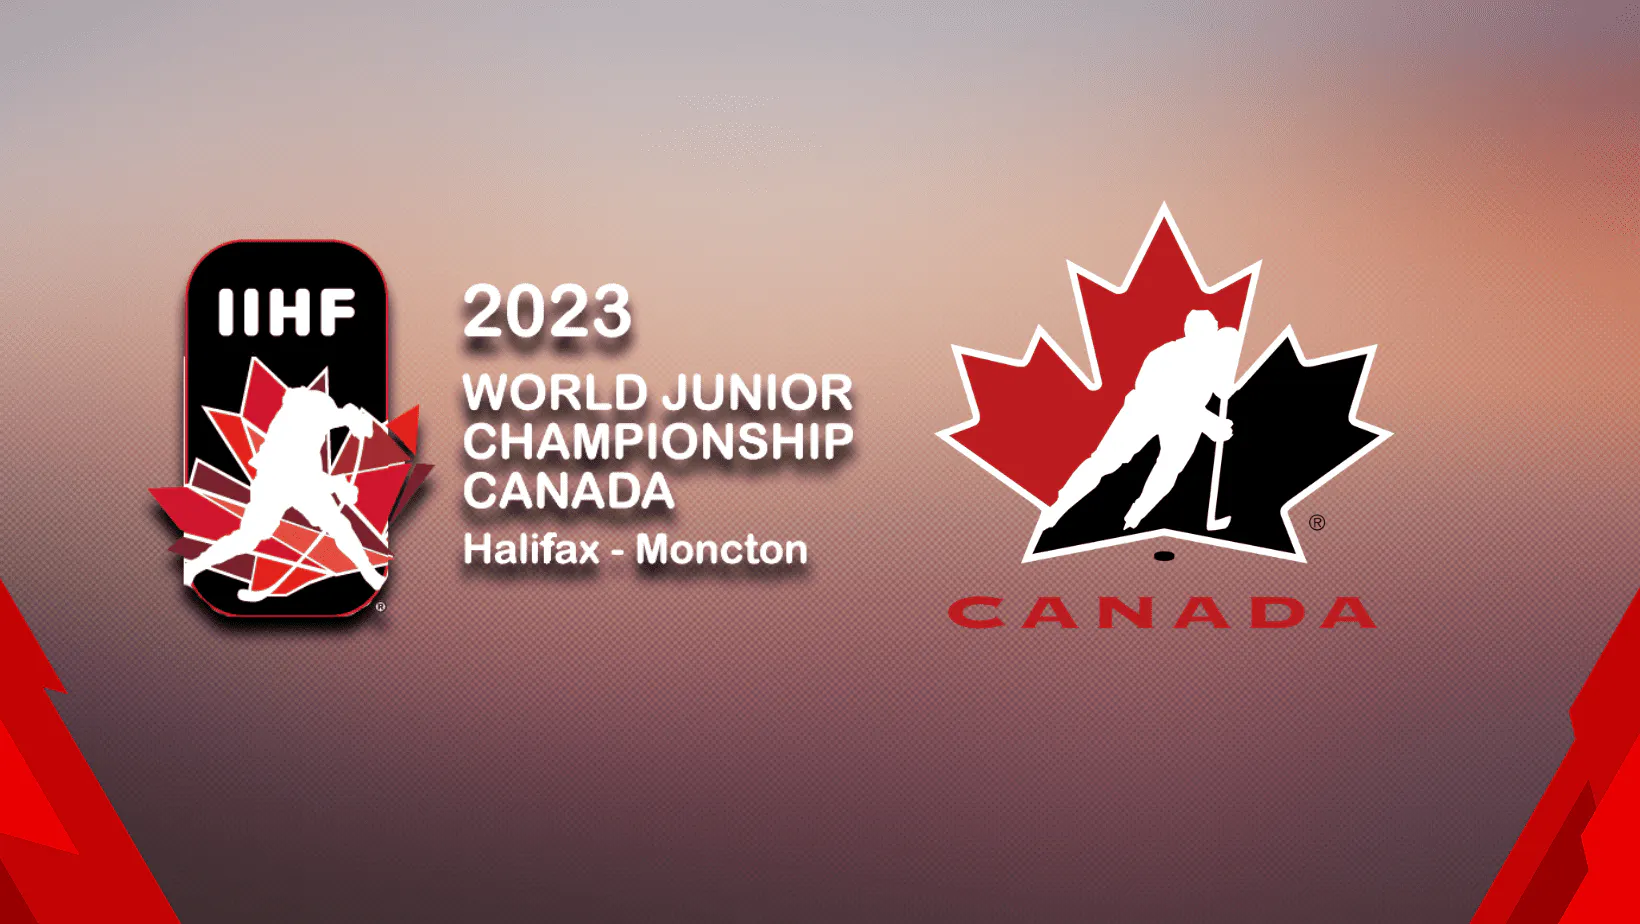 Canada beats Czechia to win gold at 2023 World Junior Championship